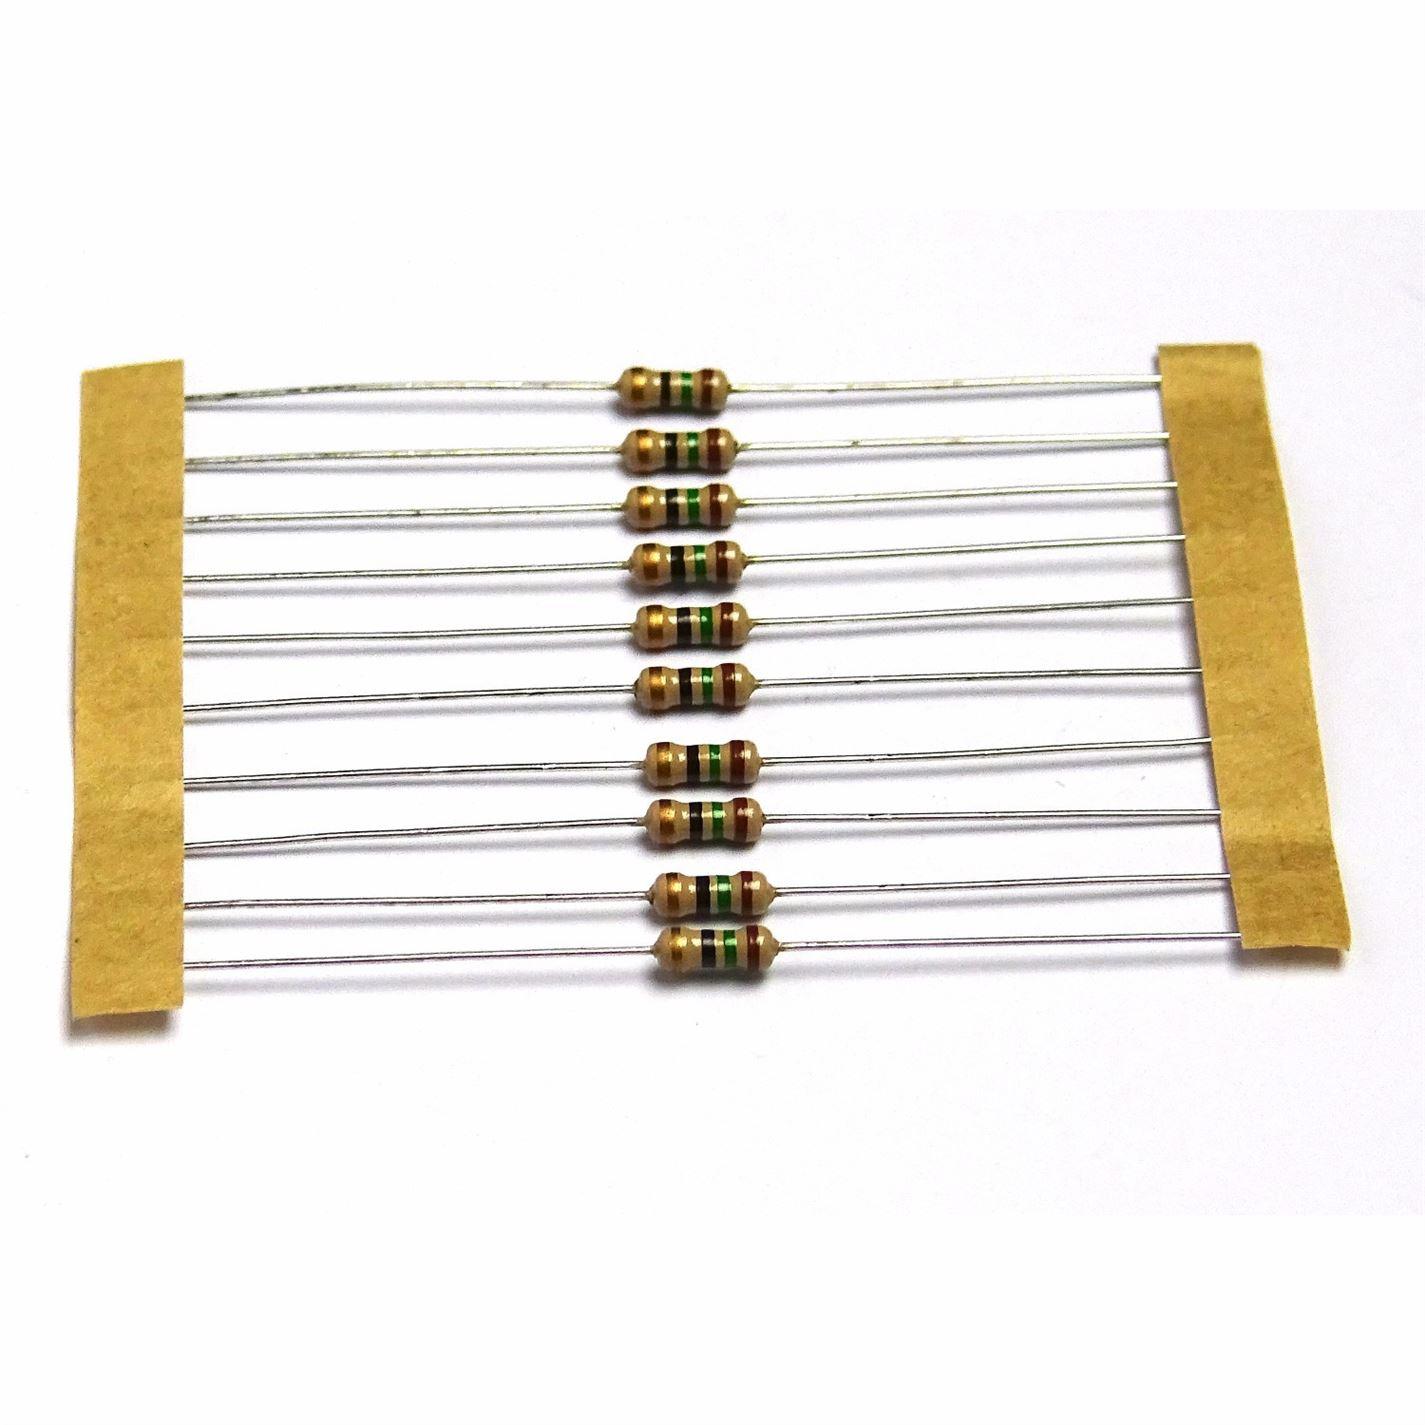 10 x Resistors 15 OHM Ohms 1/4W 0.25W 5% Carbon Film - UK Seller